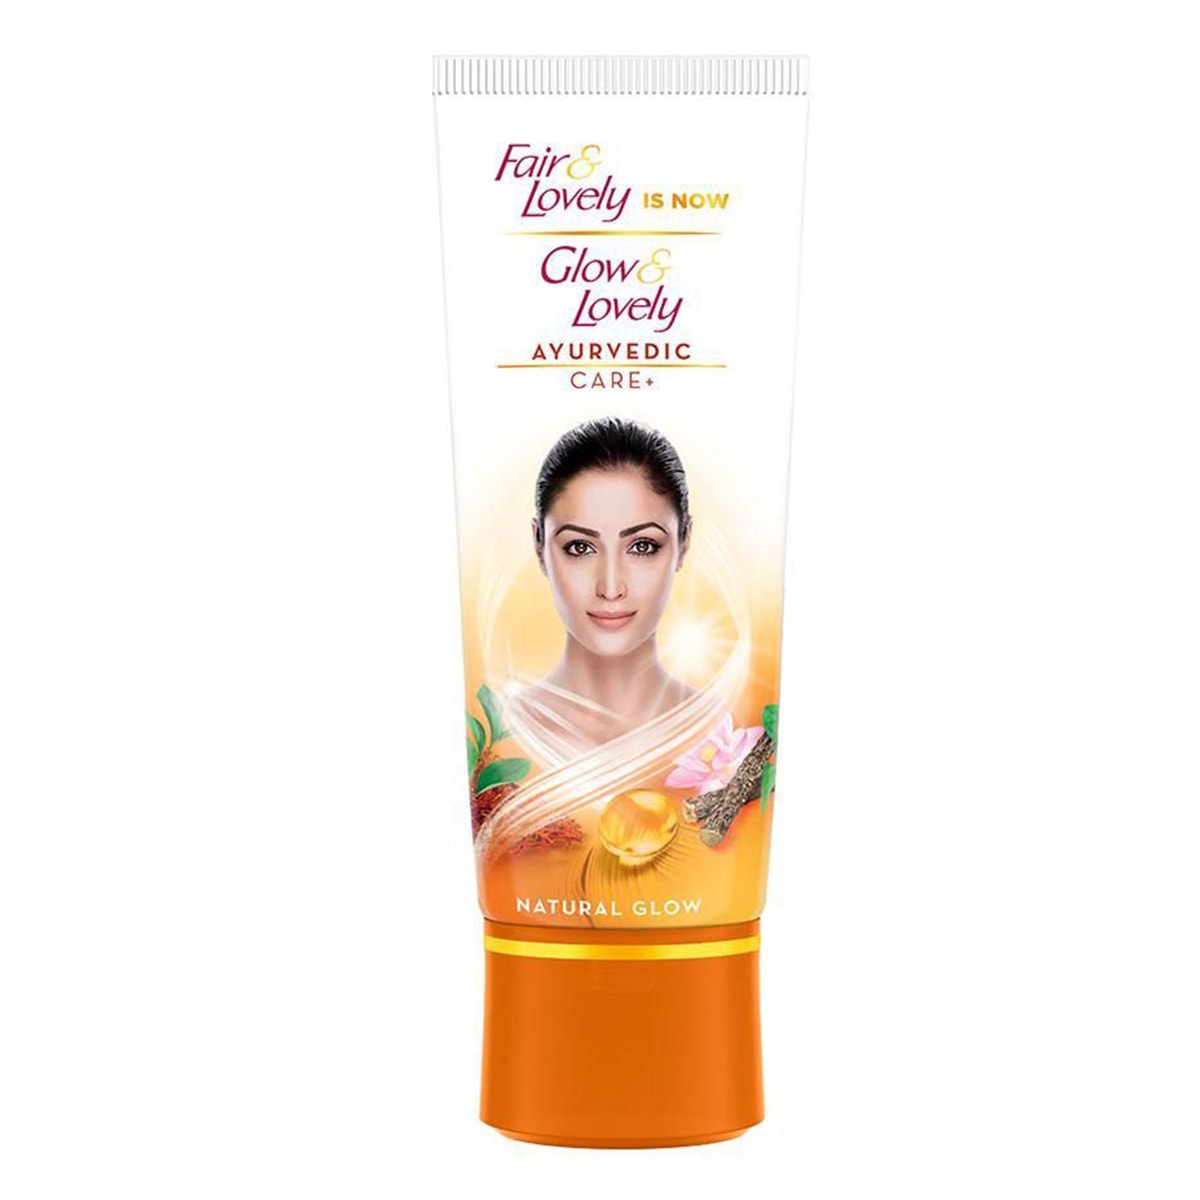 Buy Glow and Lovely Ayurvedic Care Cream - 50 gm